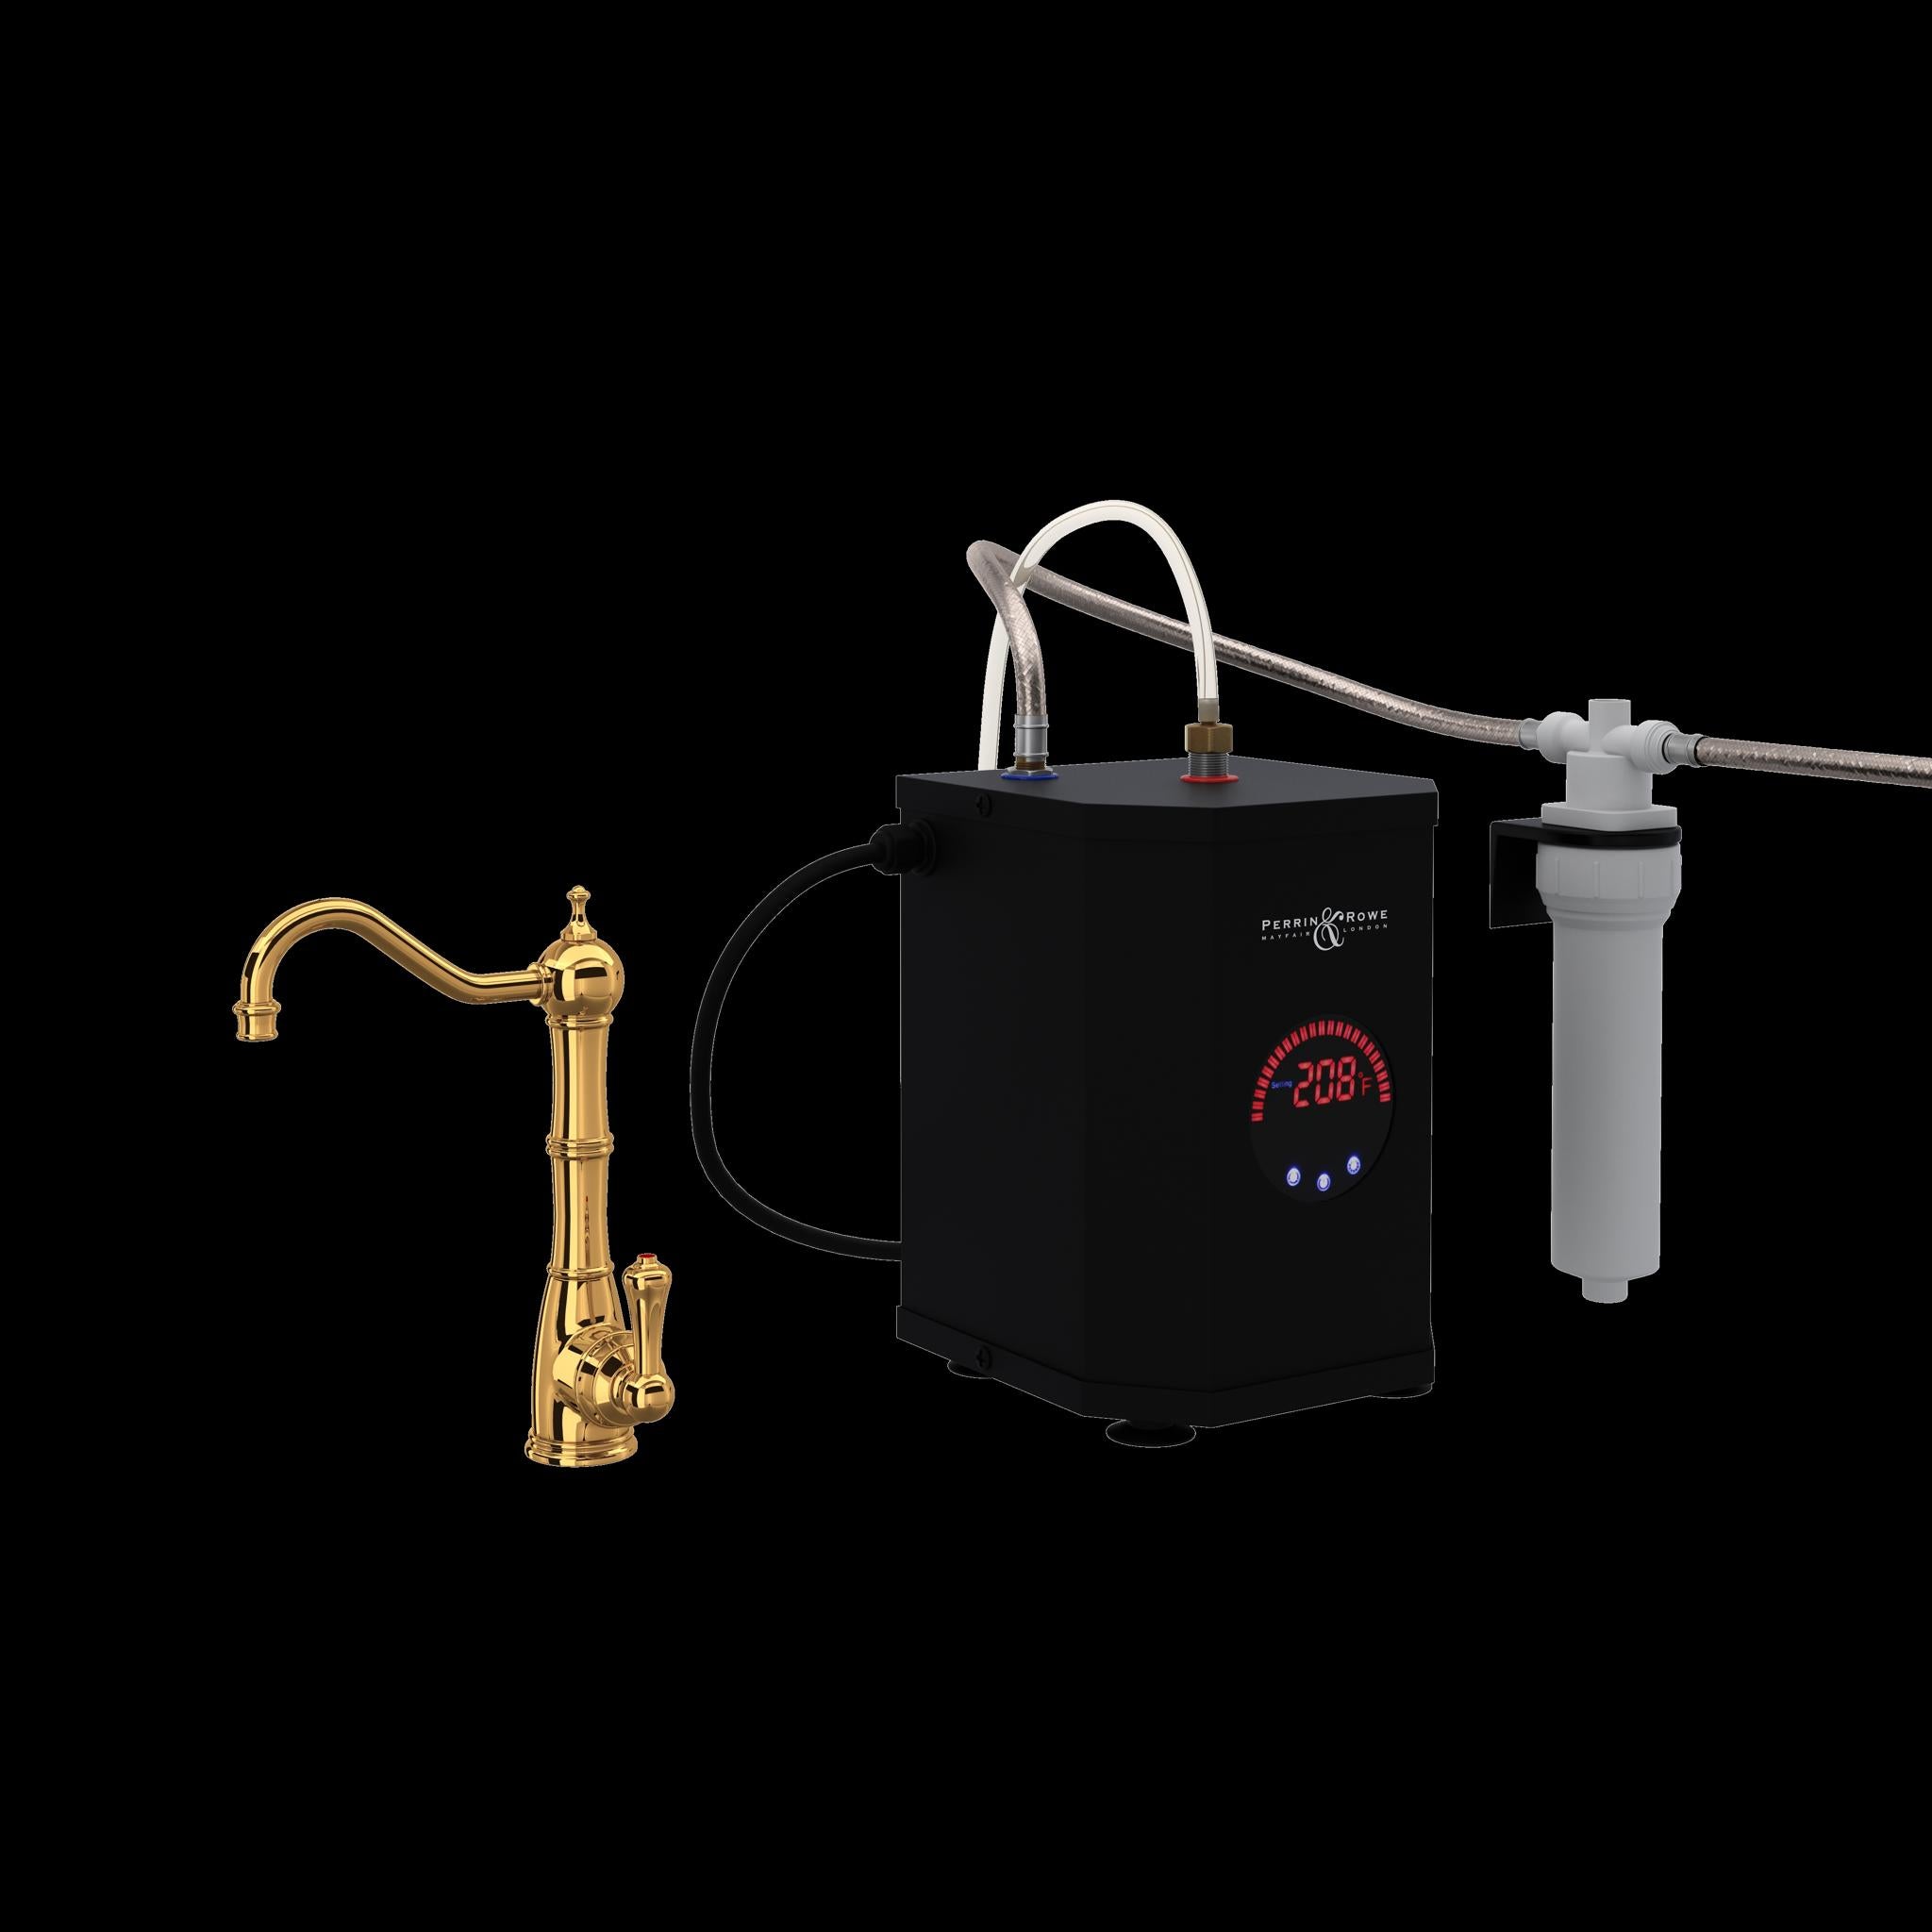 Perrin & Rowe U.KIT1323 Edwardian Hot Water Dispenser, Tank And Filter Kit